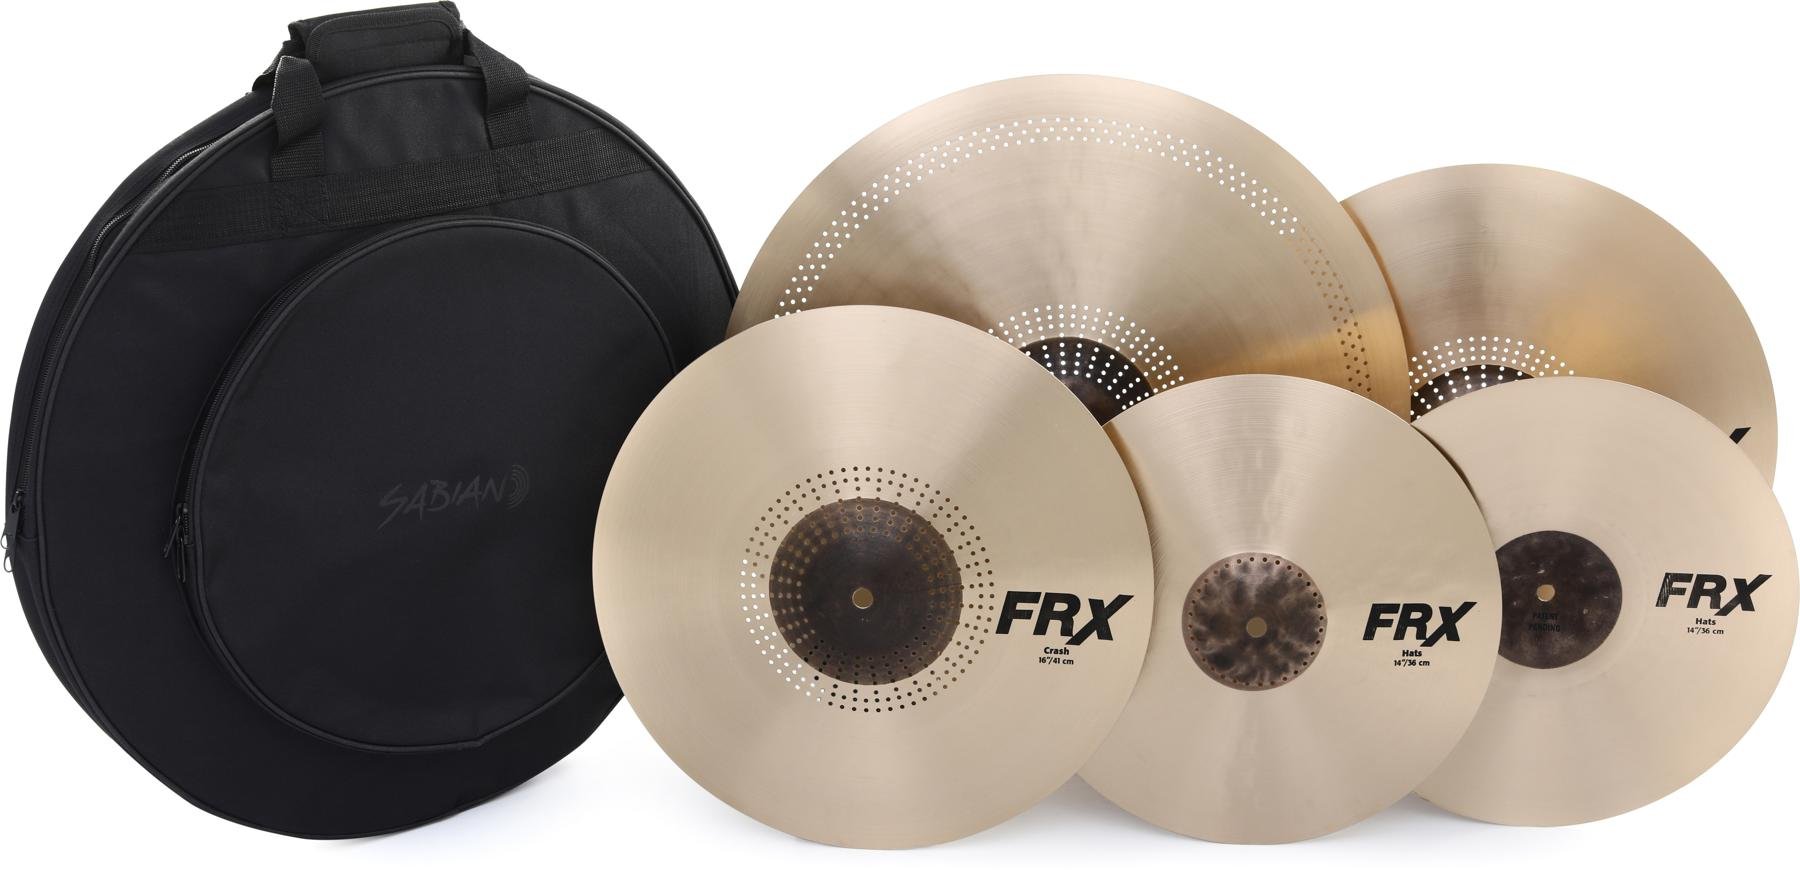 Sabian FRX Performance Cymbal Set - 14/16/18/21 inch - with Free 